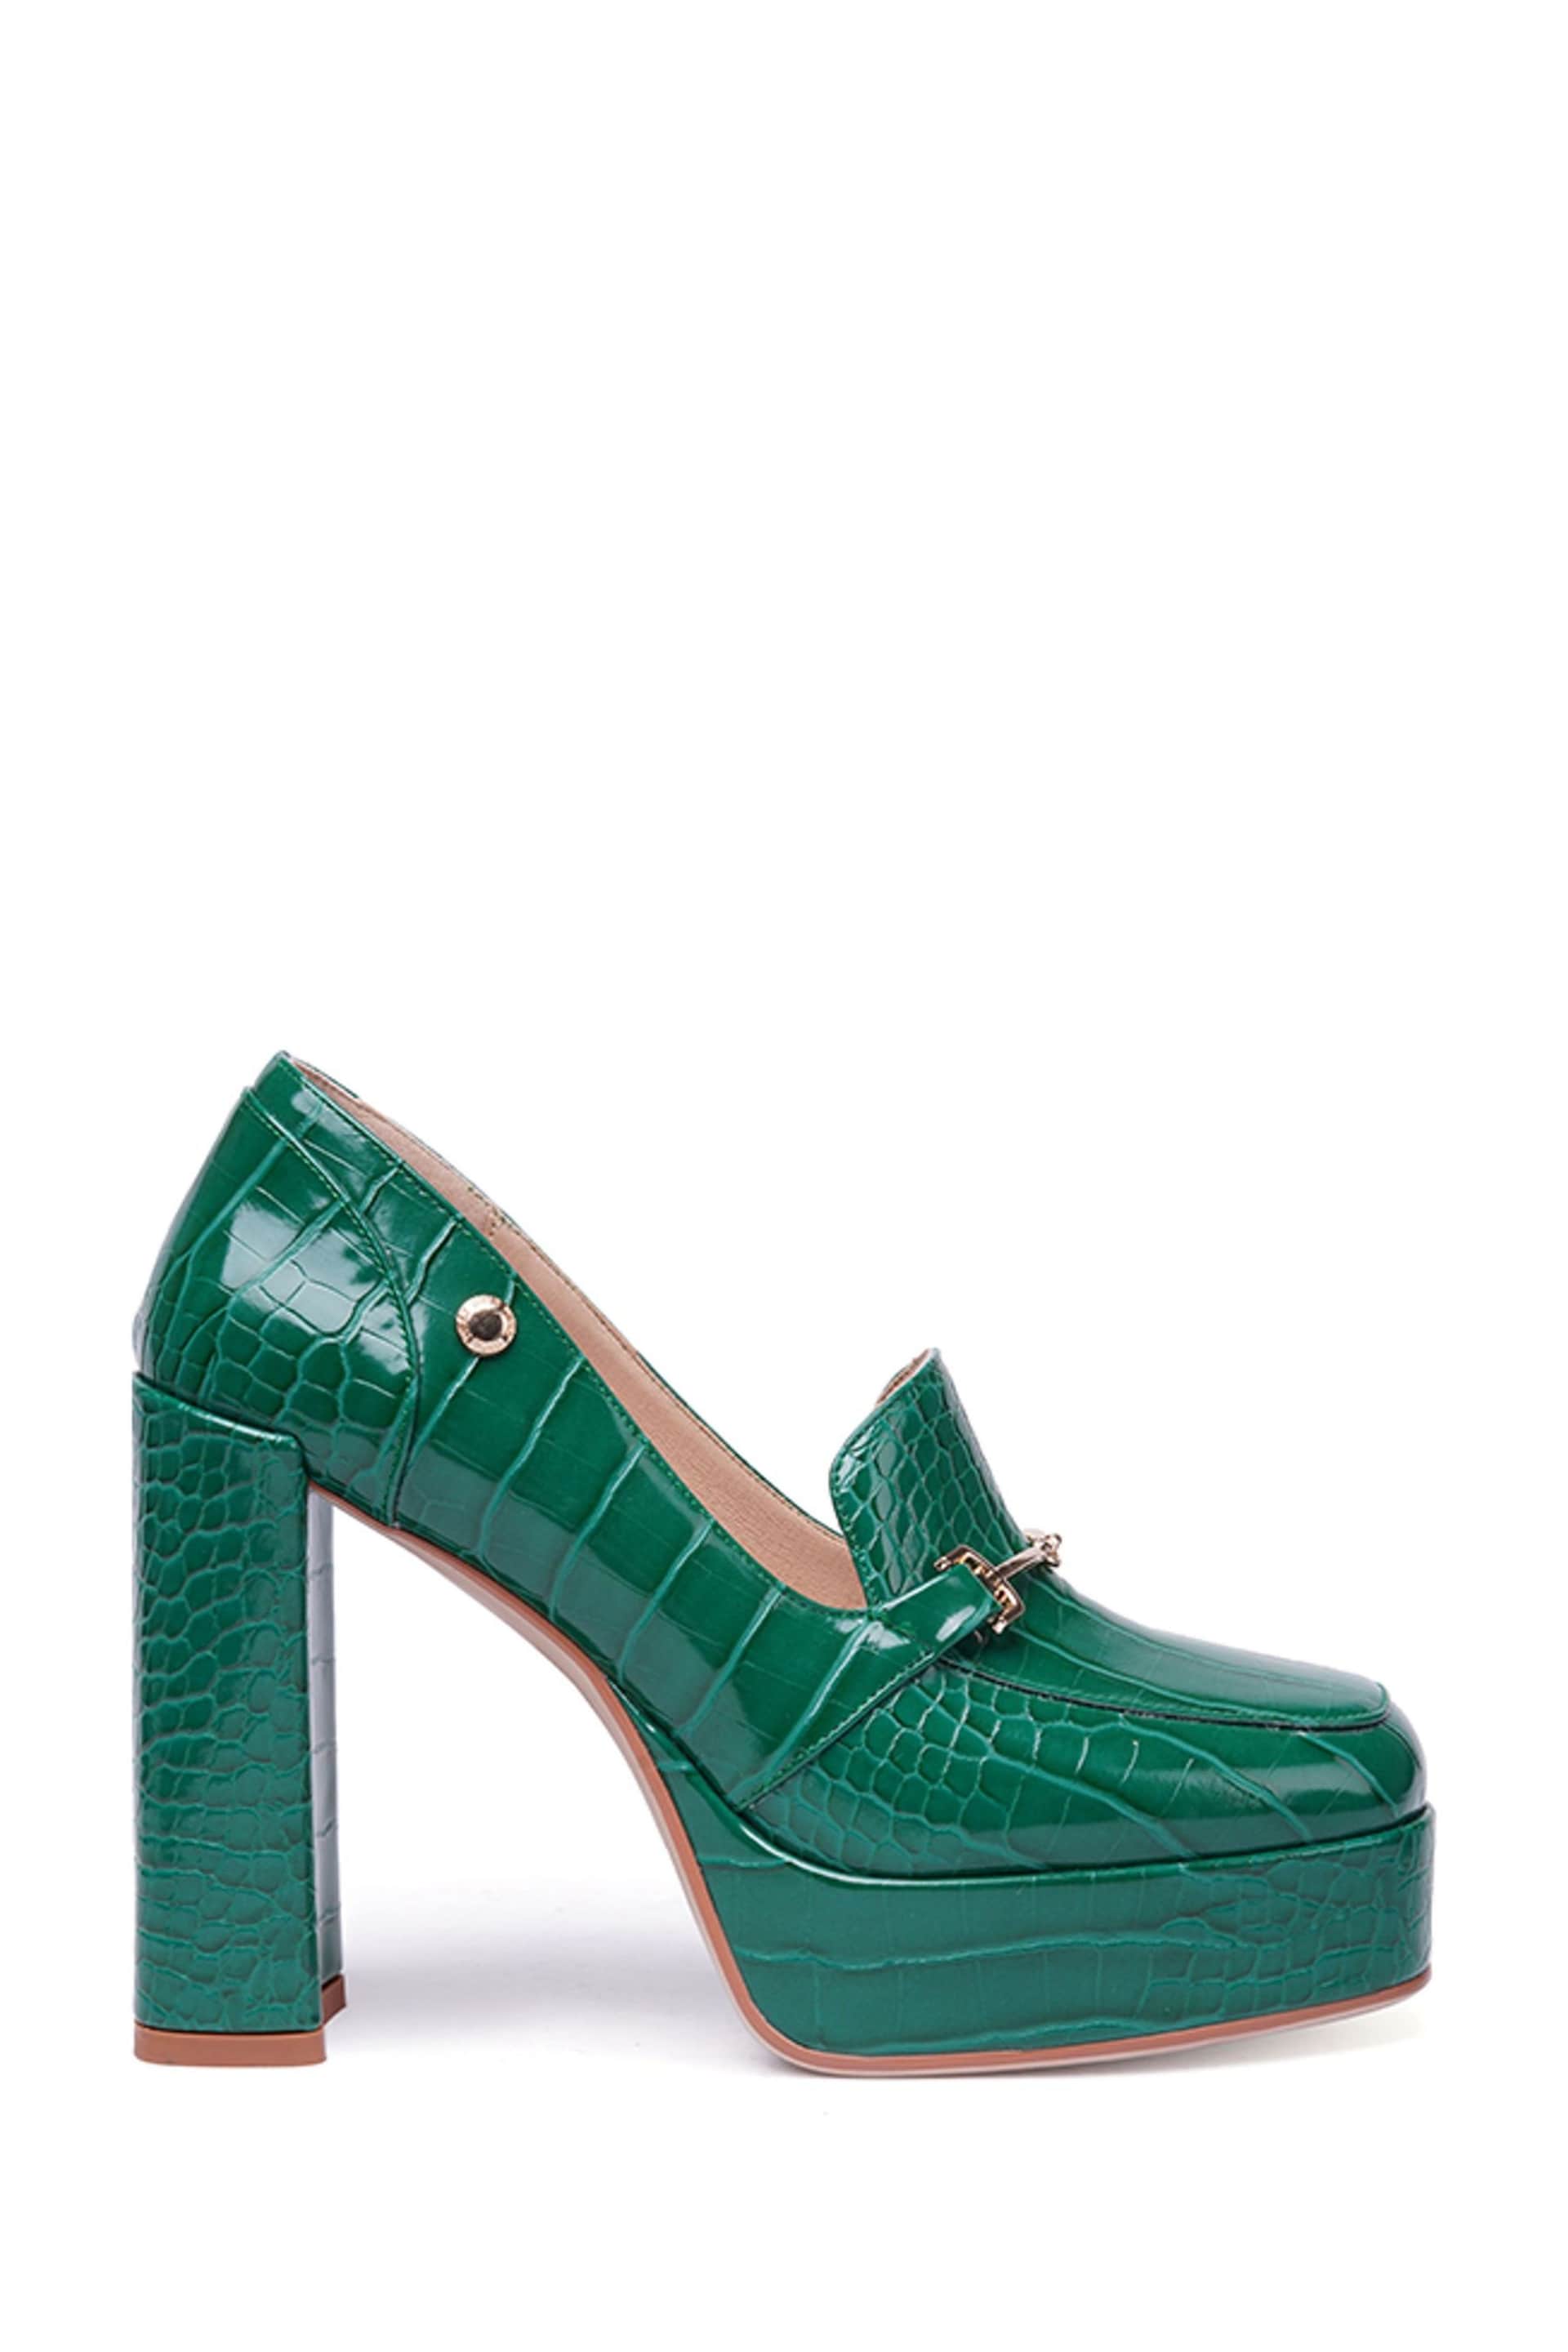 Nine West Womens Green 'Tamika' Croc Effect Block Heel Platform Loafers - Image 1 of 2